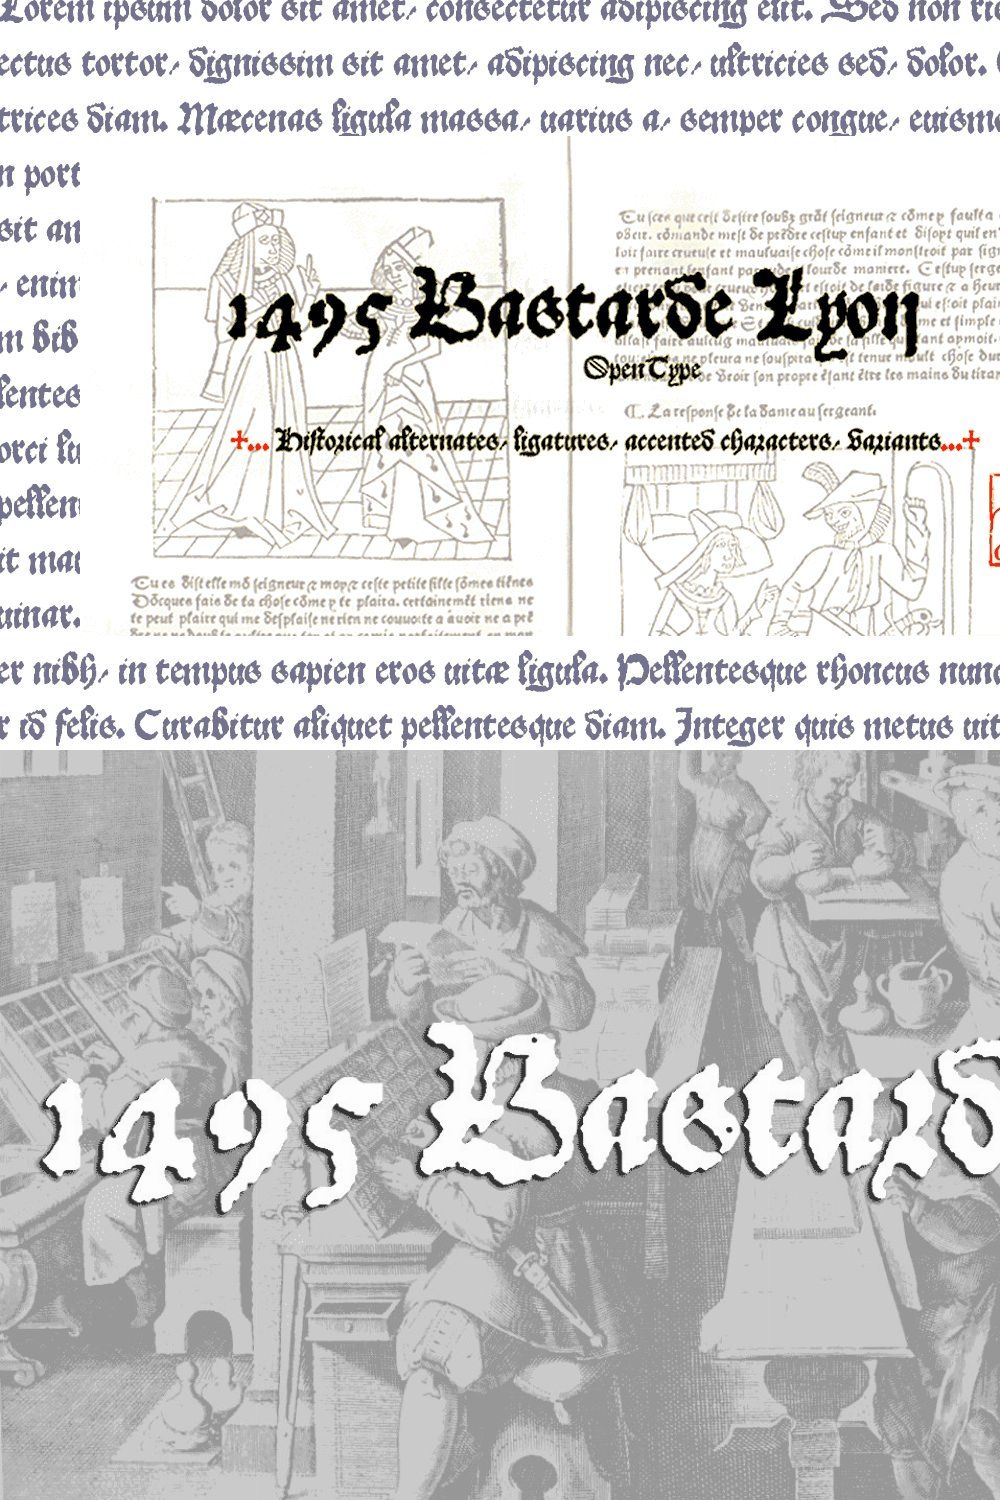 1495 Bastarde Lyon OTF pinterest preview image.